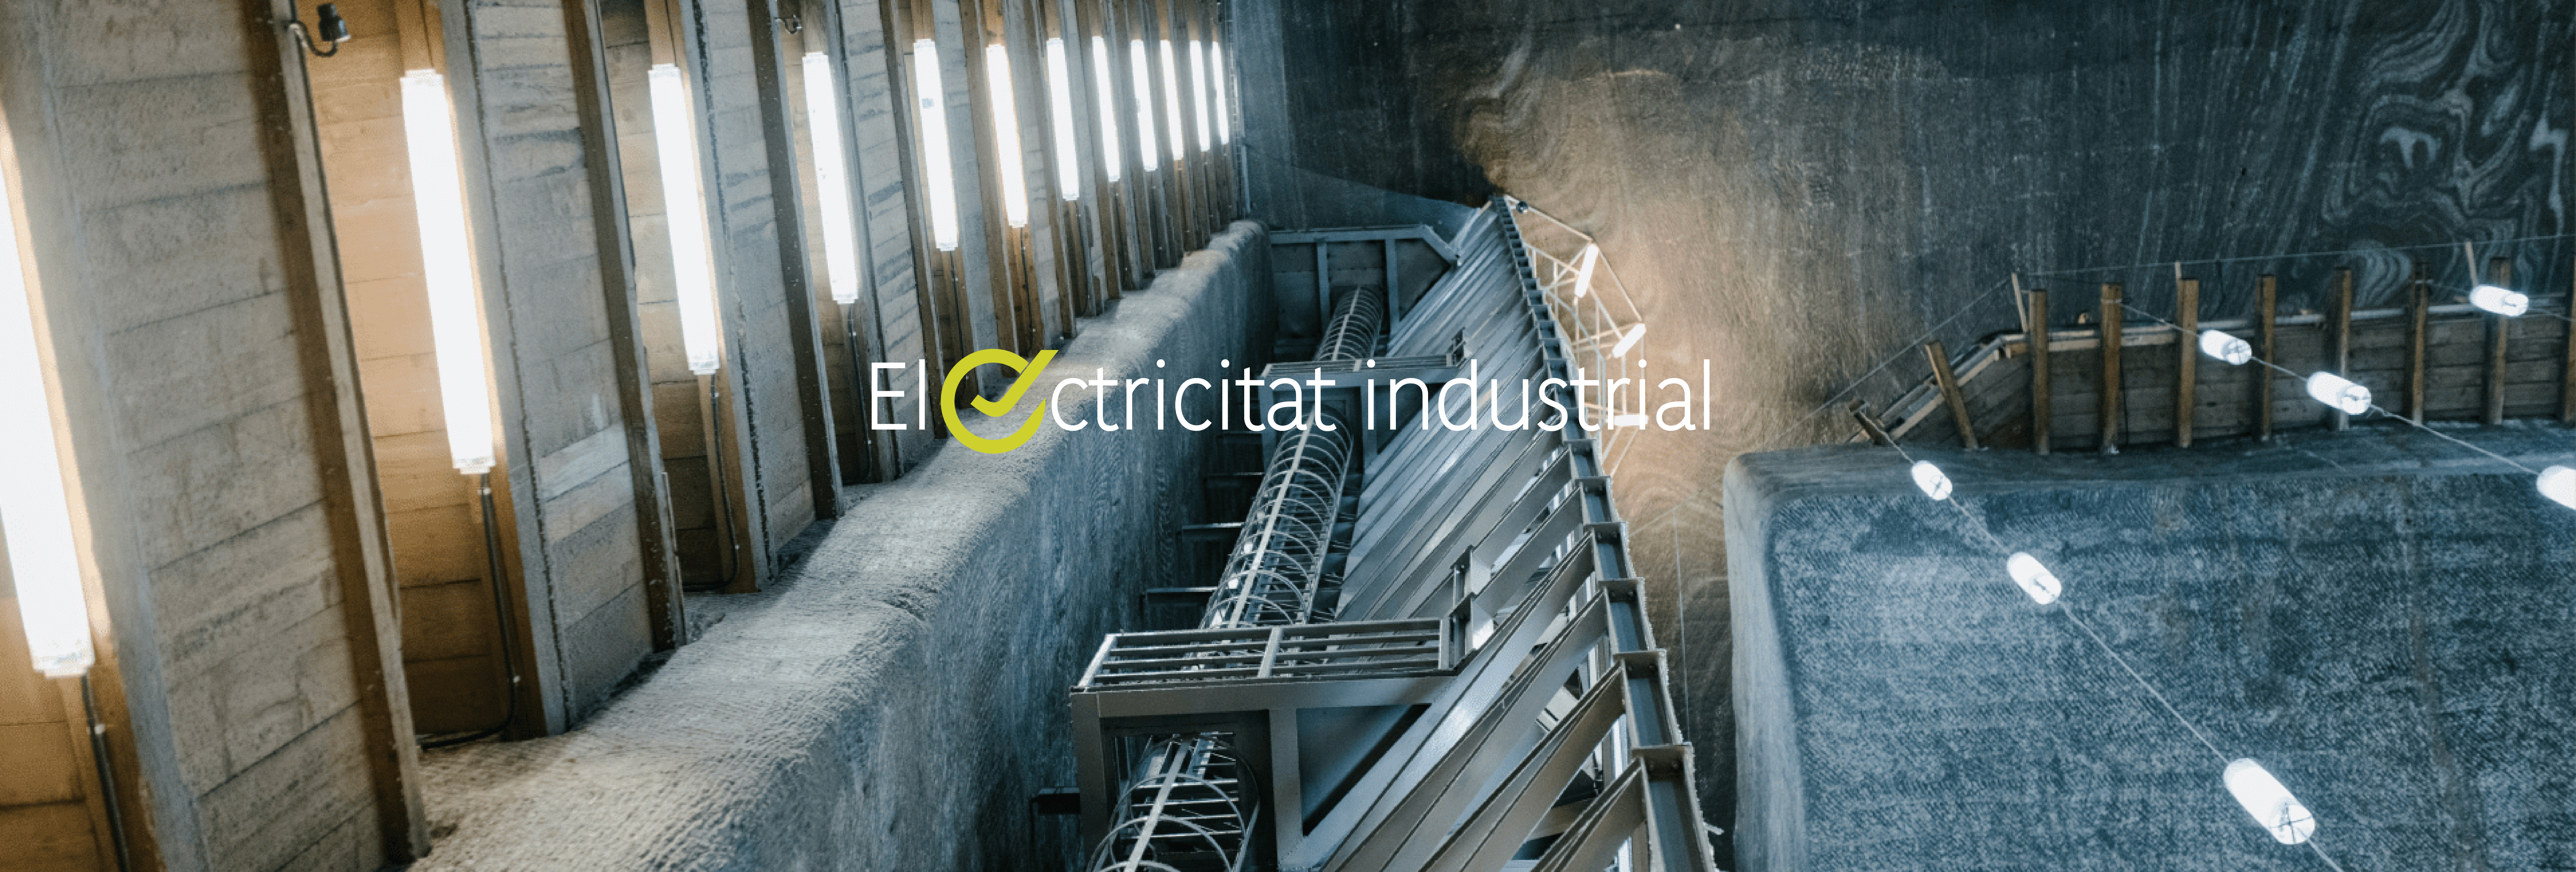 Electricitat industrial